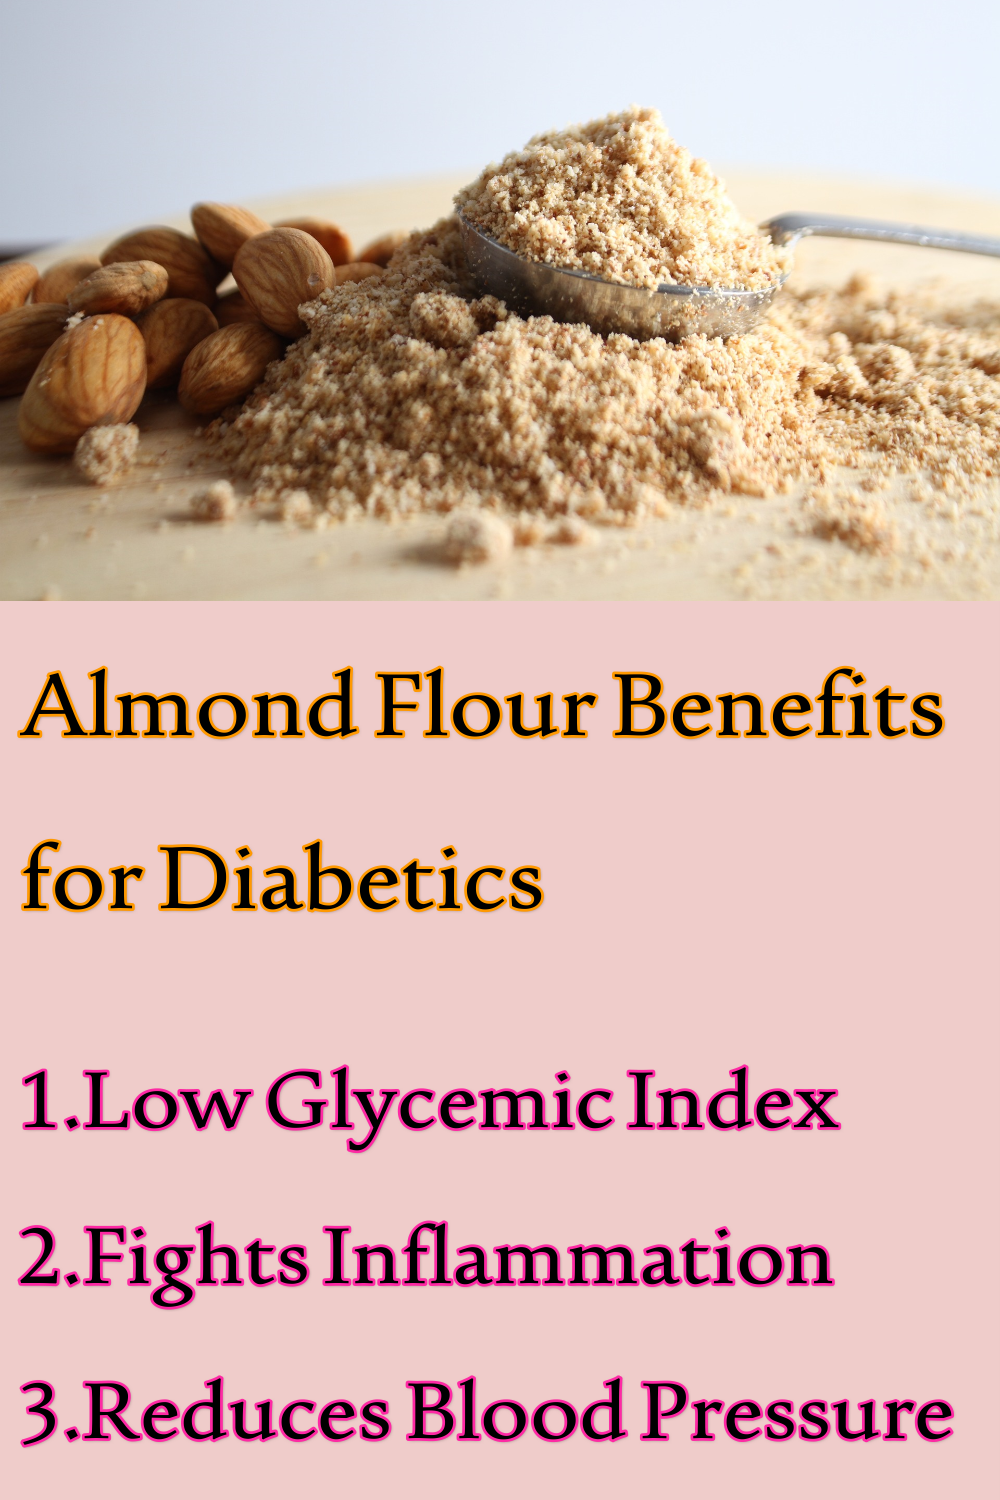 is almond flour good for diabetes